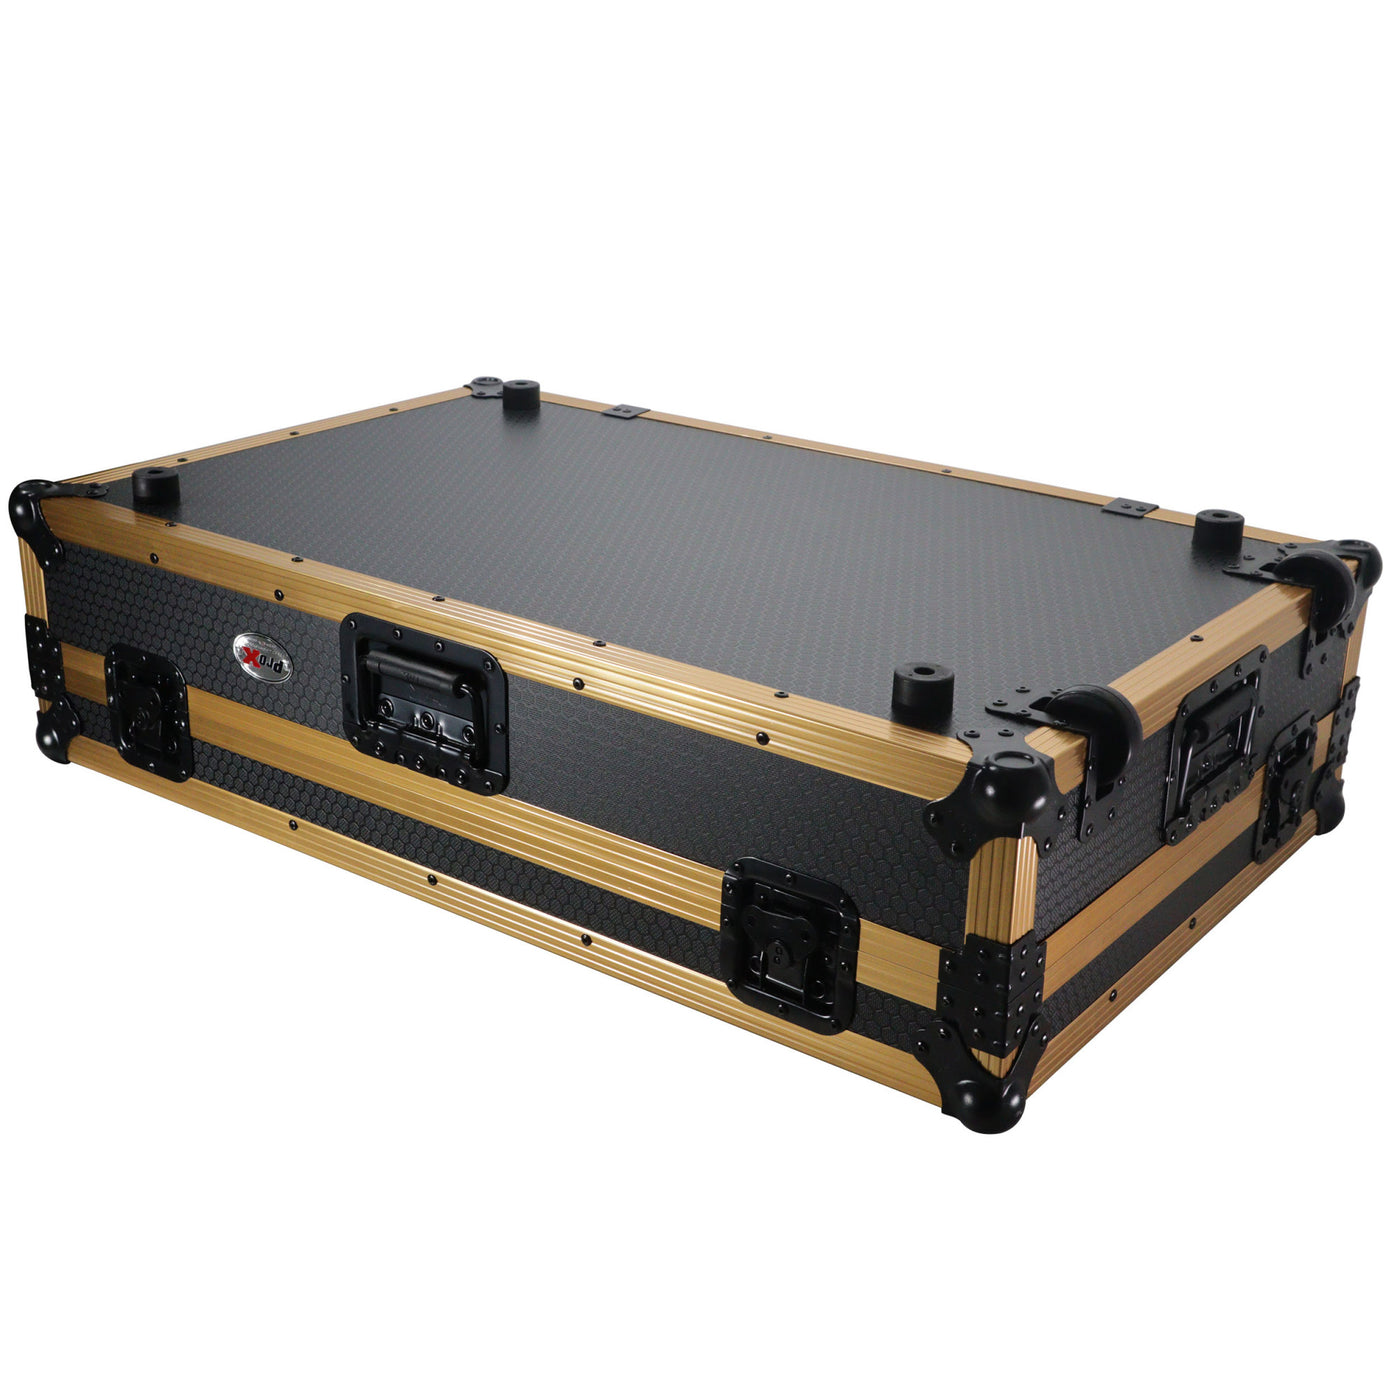 ProX XS-XDJXZWFGLD ATA Flight Case, For Pioneer XDJ-XZ DJ Controller, With 1U Rack Space and Wheels, Pro Audio Equipment Storage, Gold Black